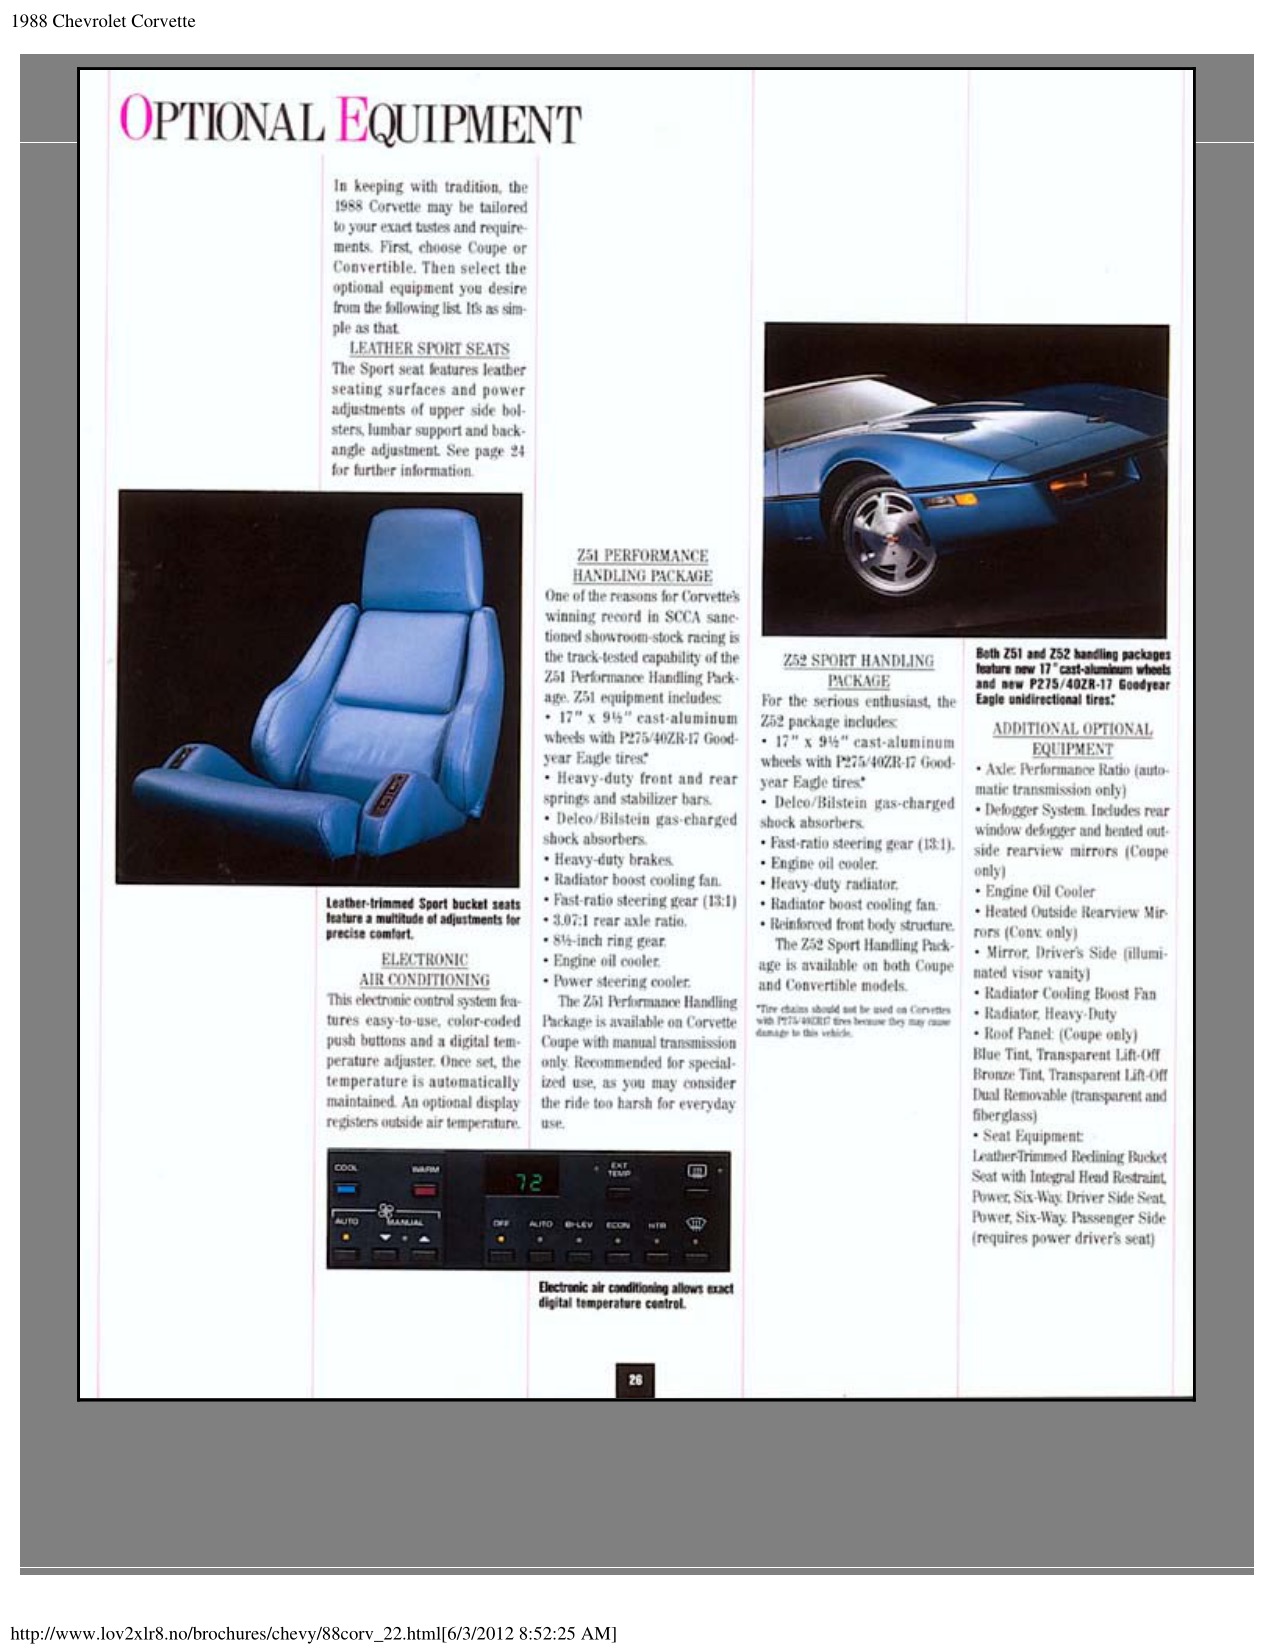 1988 Corvette Brochure Page 10